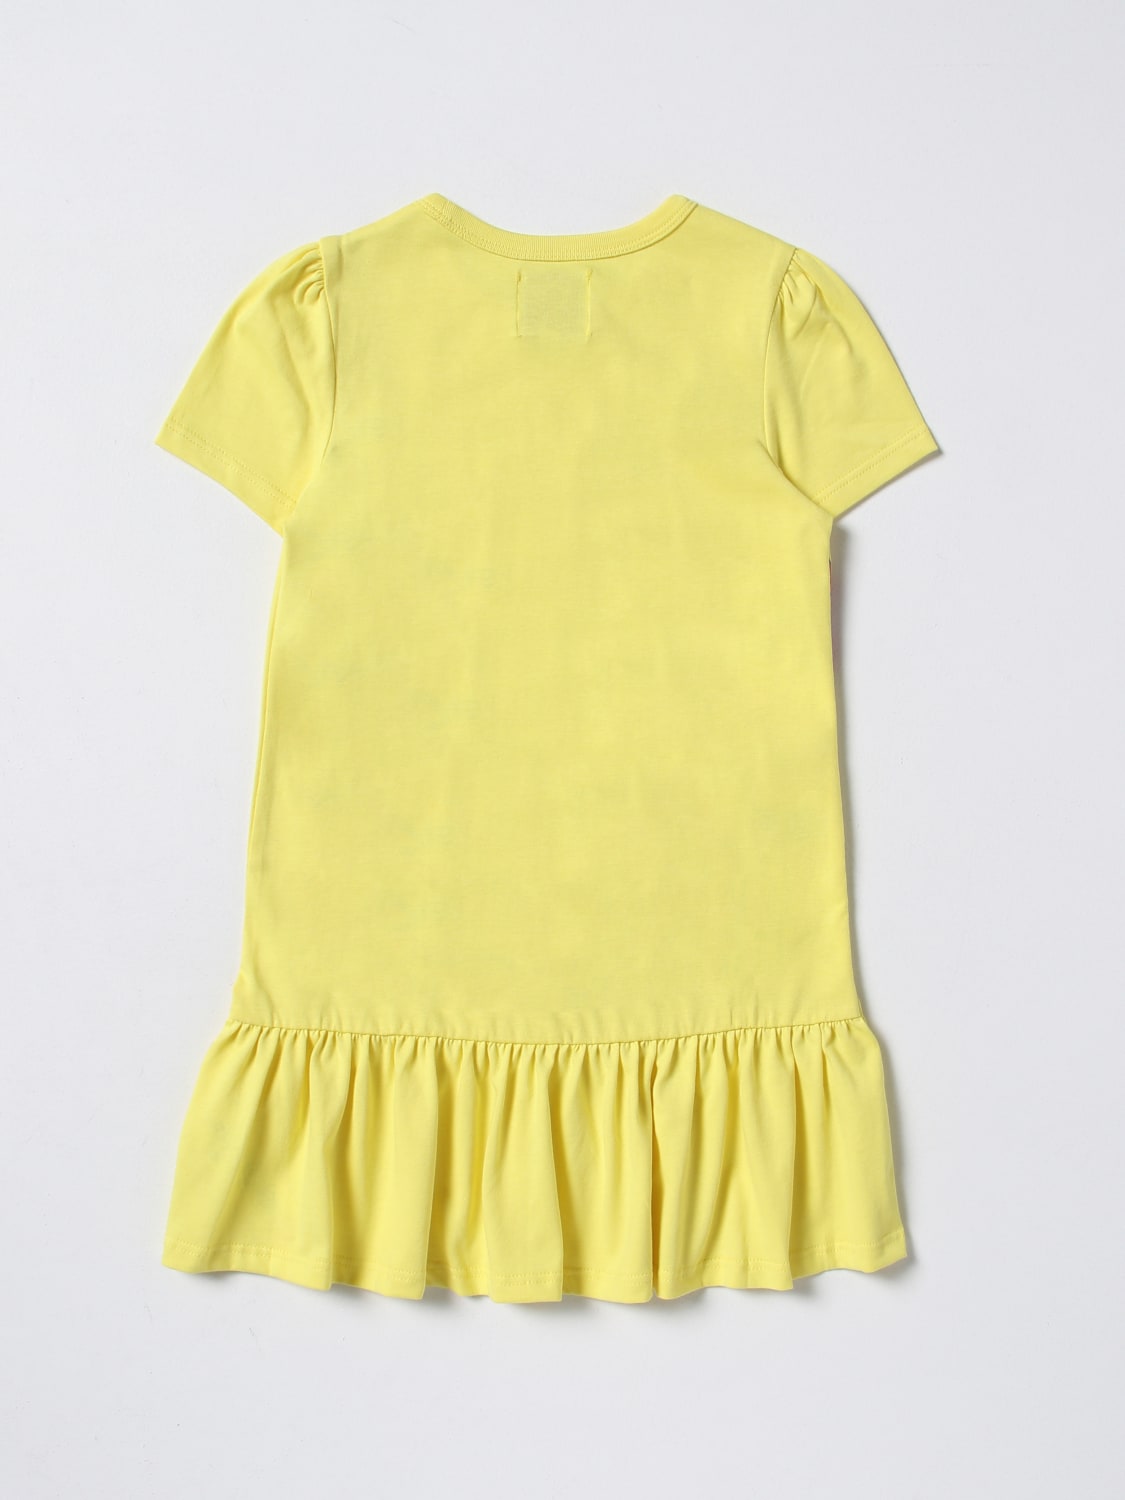 LITTLE MARC JACOBS: dress for girls - Yellow | Little Marc Jacobs dress ...